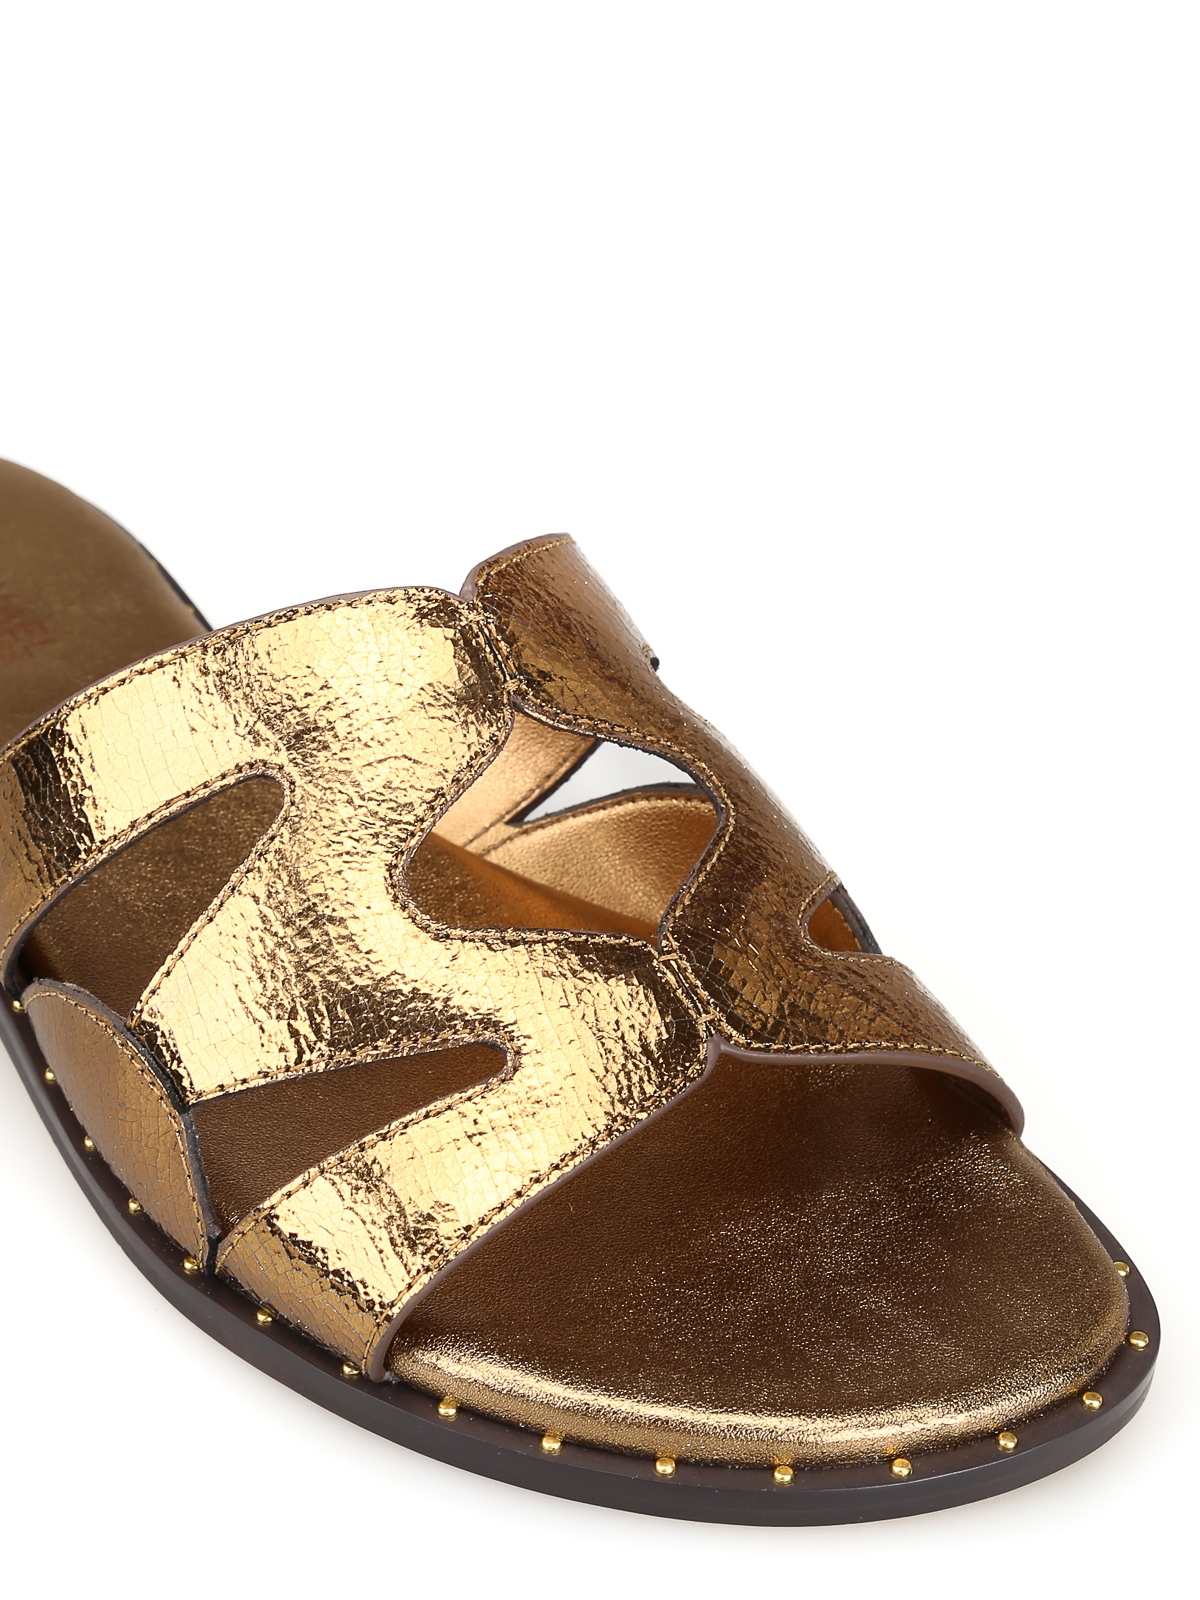 Sandals Michael Kors - Annalee gold-tone leather slide sandals -  40S9ANFP1M796